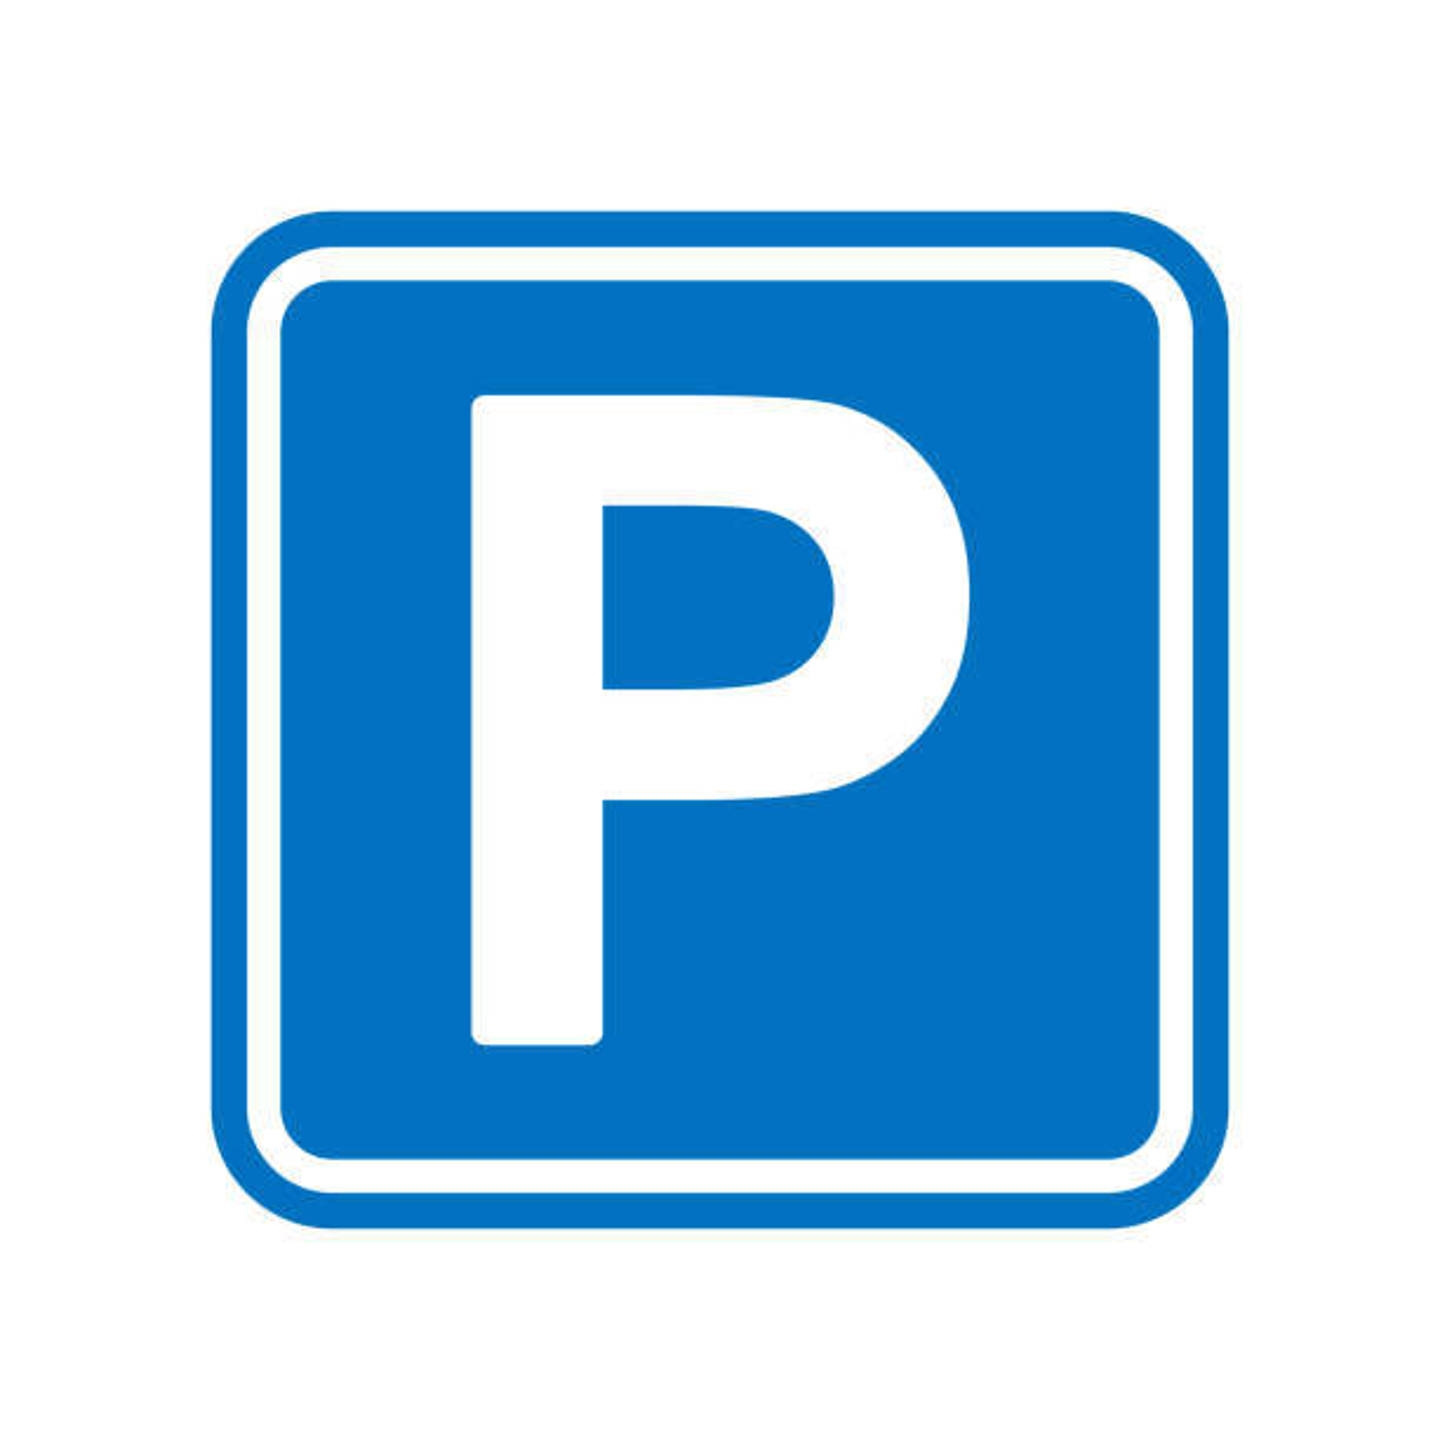 Parking & garage te  koop in Sint-Jans-Molenbeek 1080 77250.00€  slaapkamers 12.50m² - Zoekertje 1324620